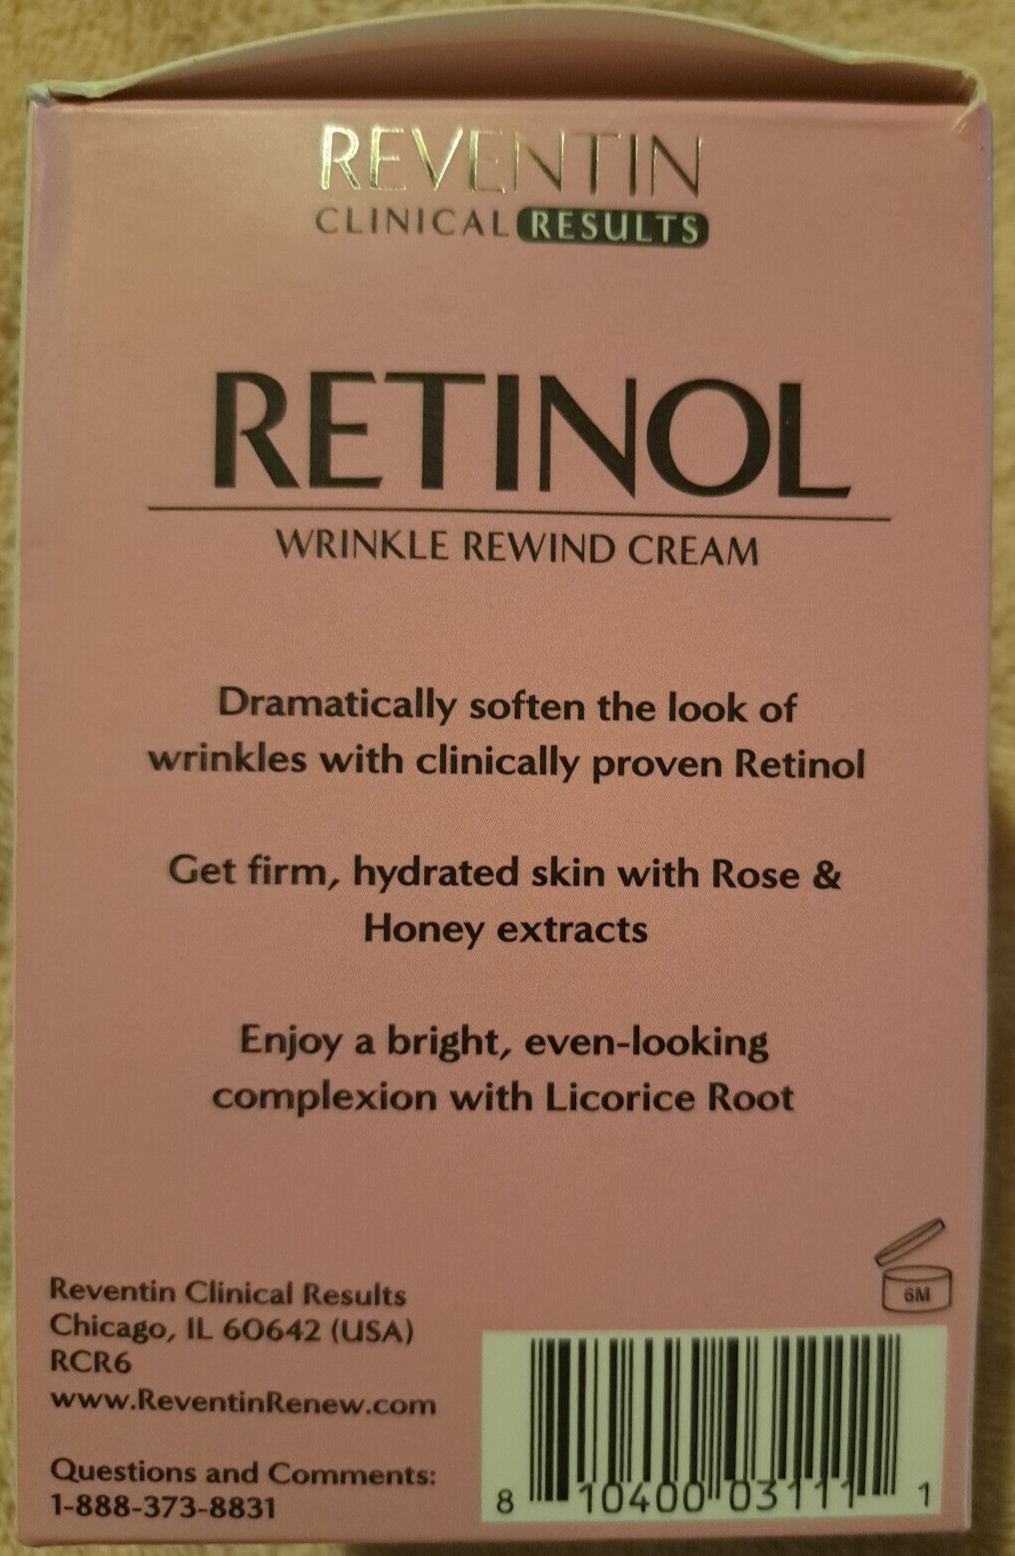 Reventin Clinical Results Retinol Wrinkle Rewind Cream 1.5 Fl Oz (44mL) - $18.76